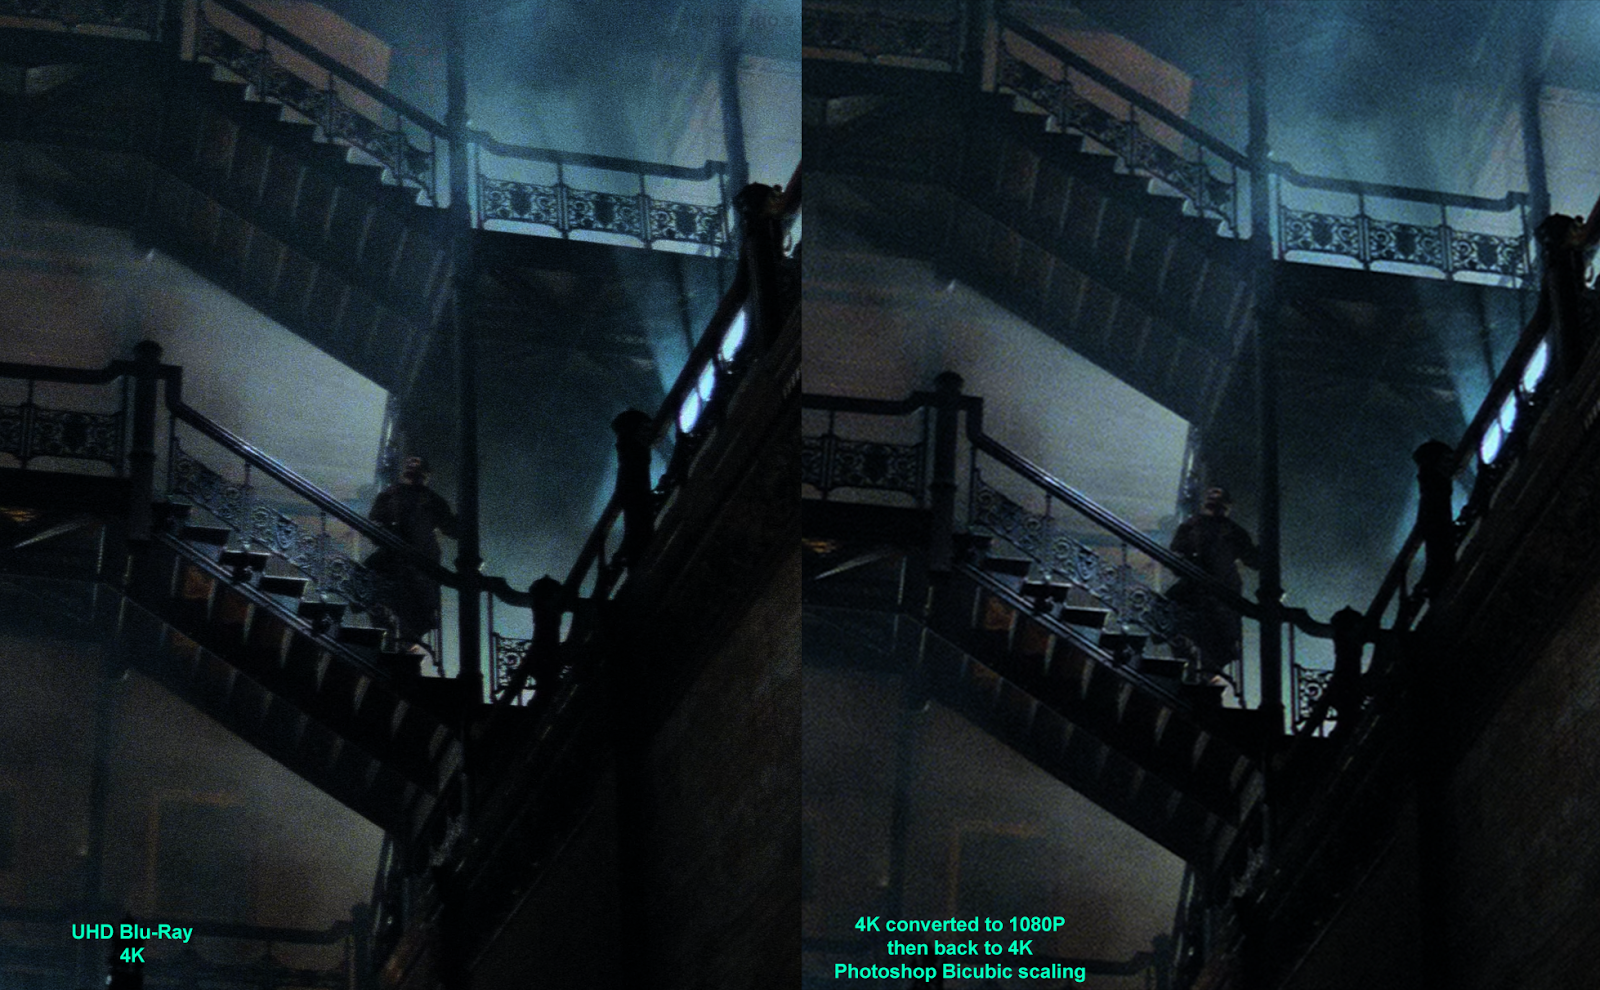 Archimago S Musings 1080p Blu Ray Vs 4k Uhd Blu Ray Blade Runner Final Cut Classic 35mm Filmmaking